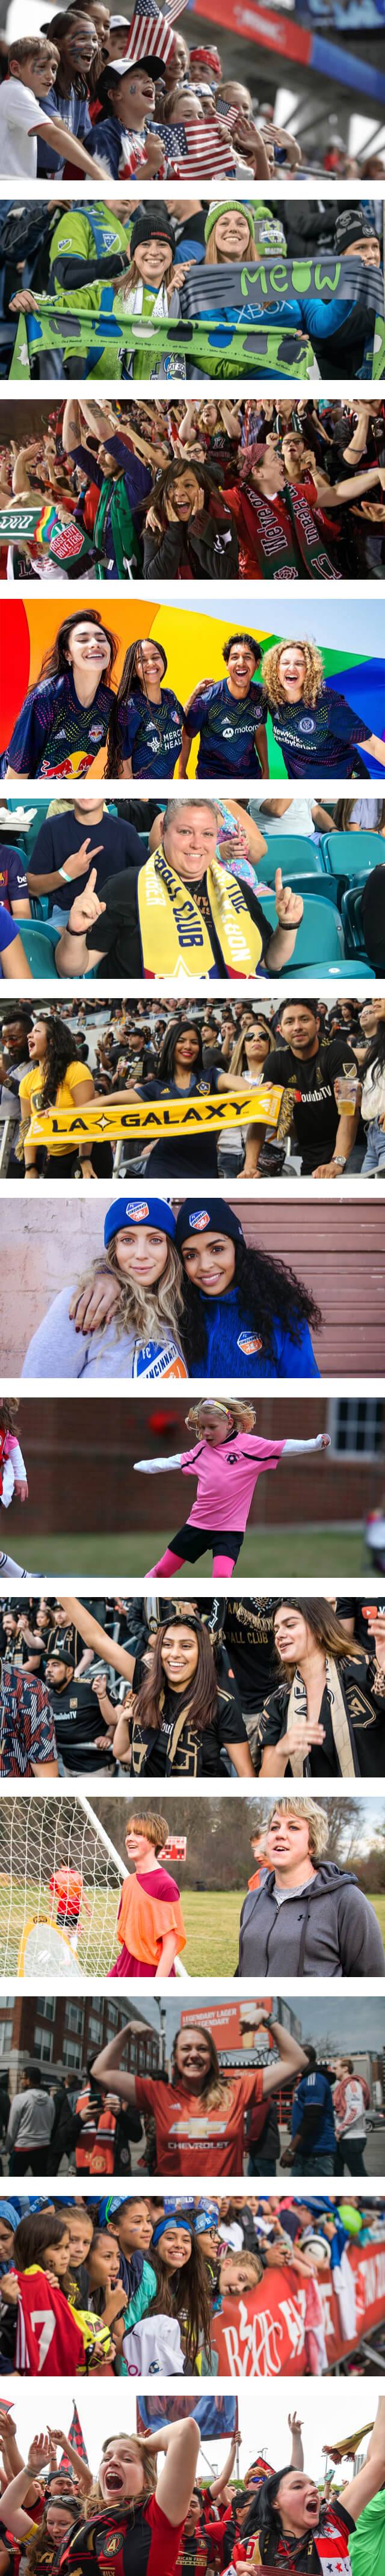 gallery of female soccer fans